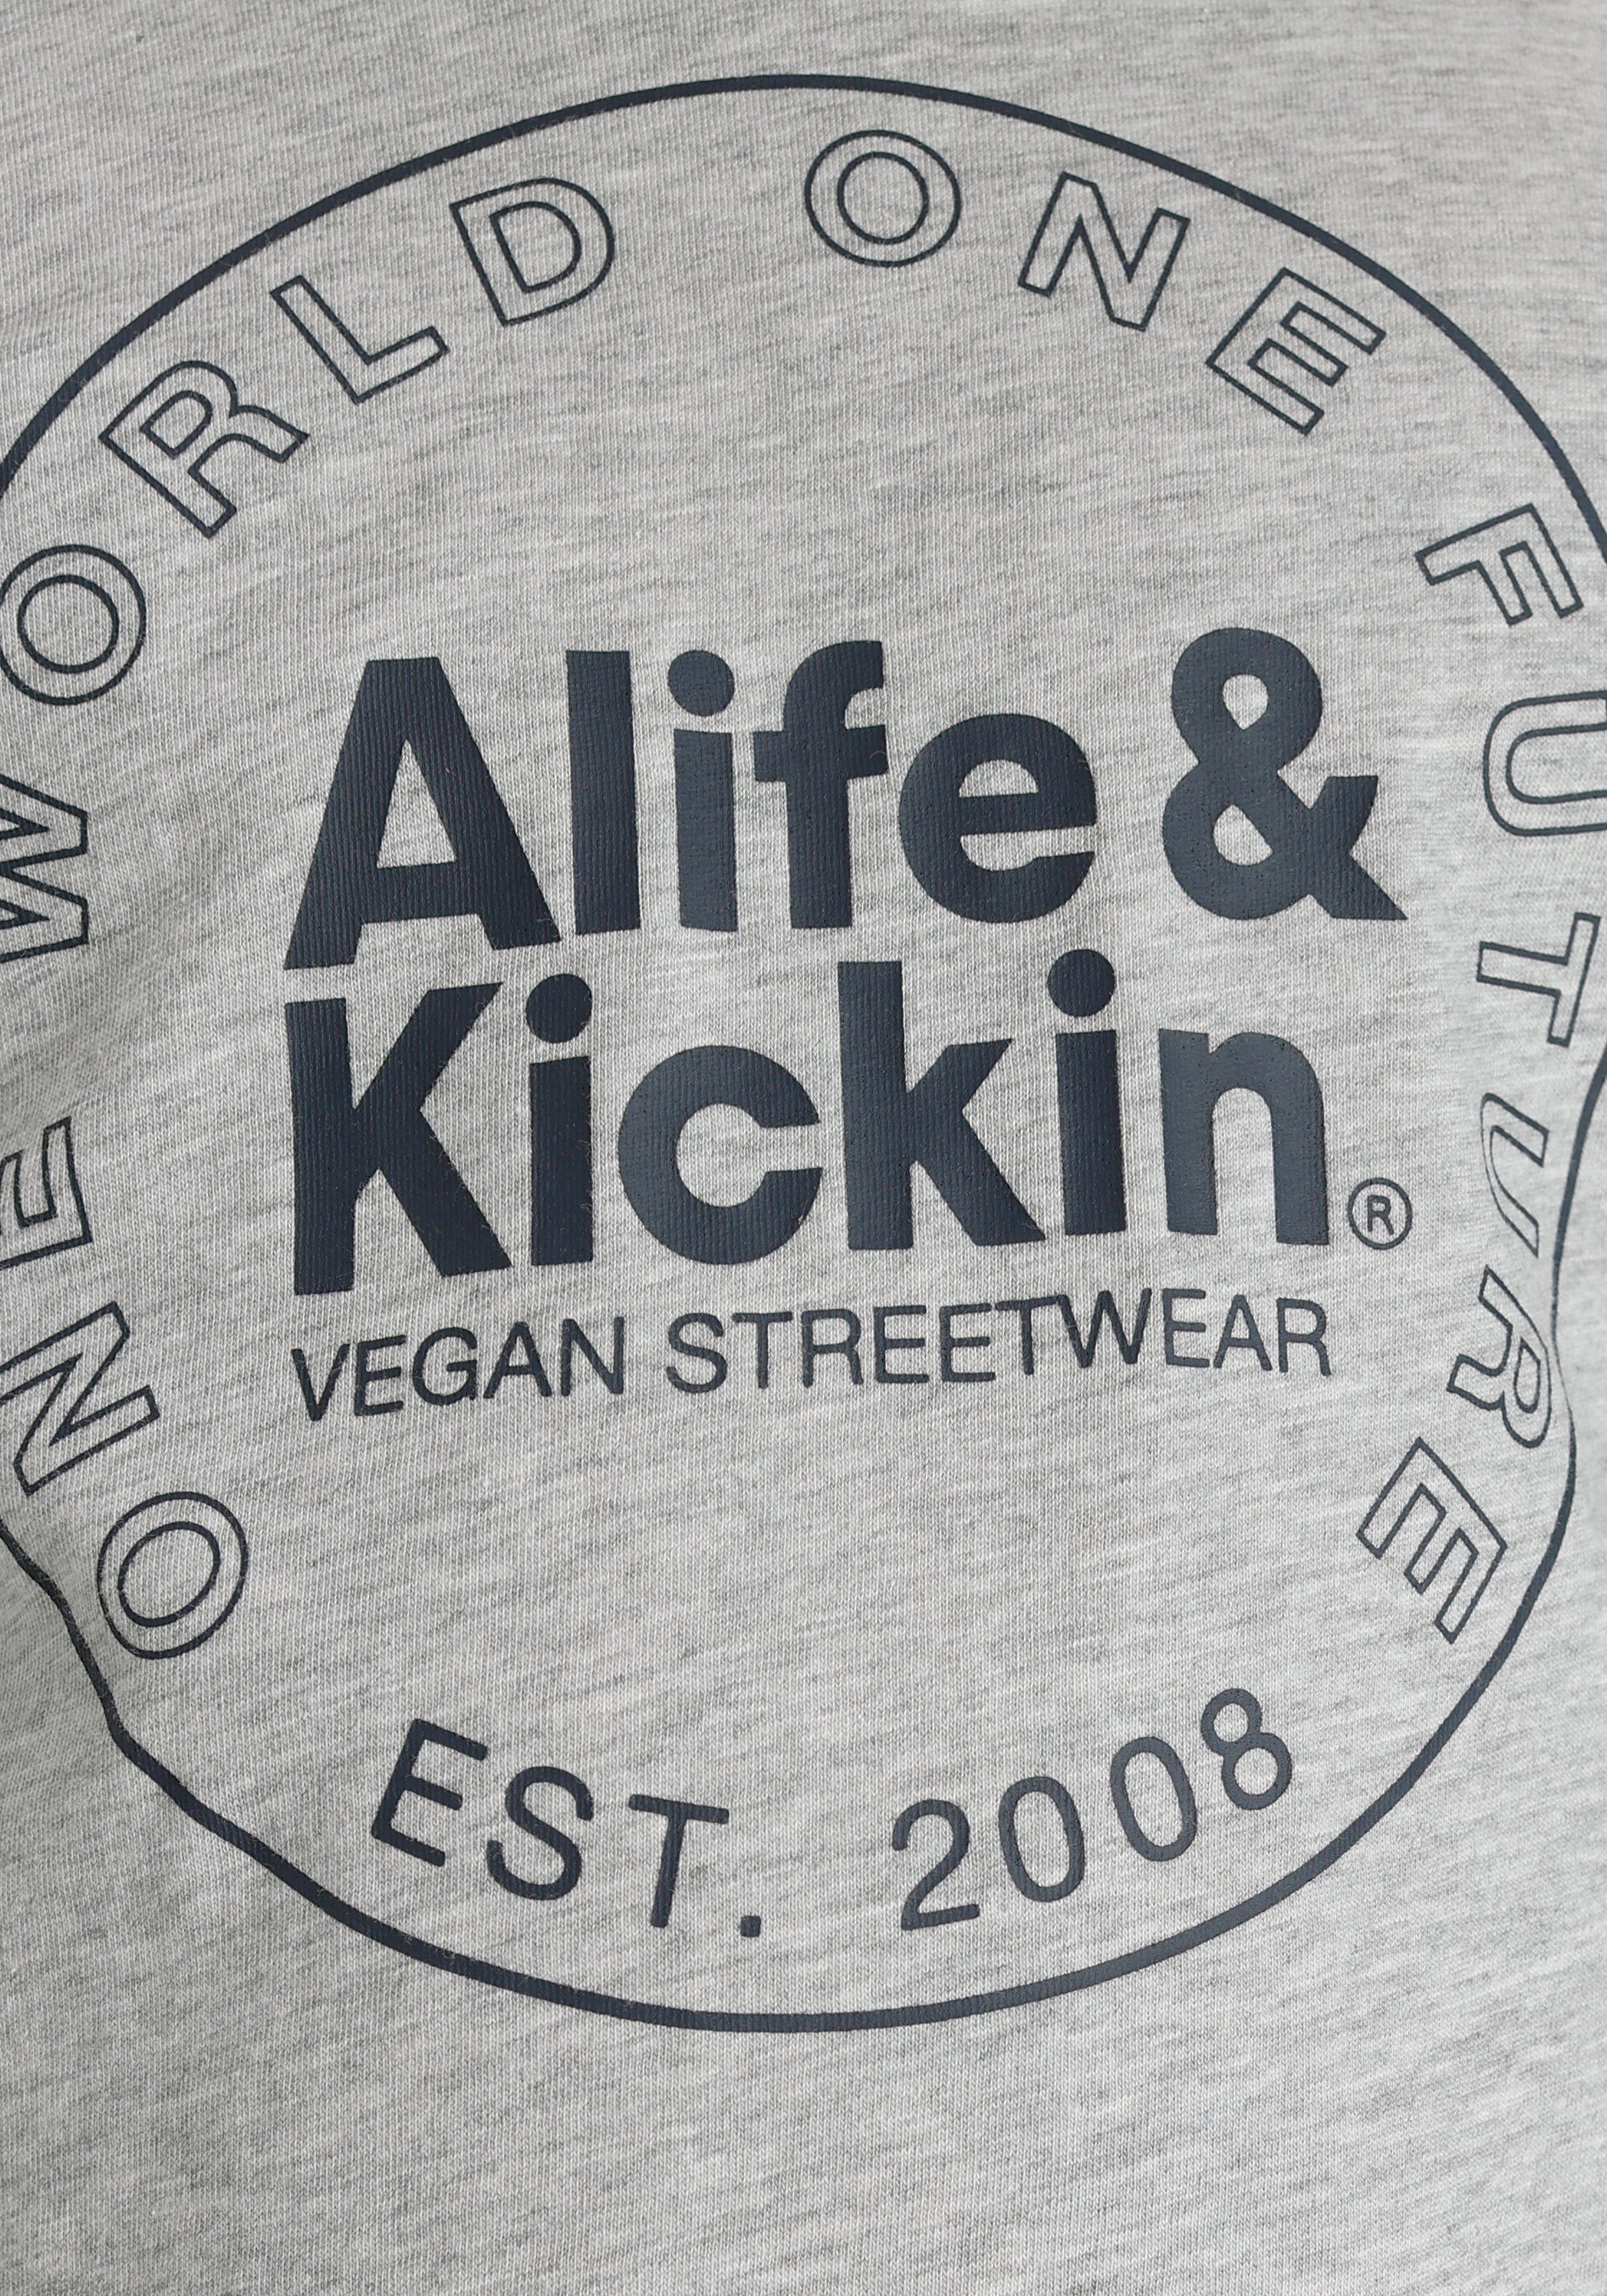 Alife & Kickin Langarmshirt Logo-Print Qualität, melierter in MARKE! NEUE